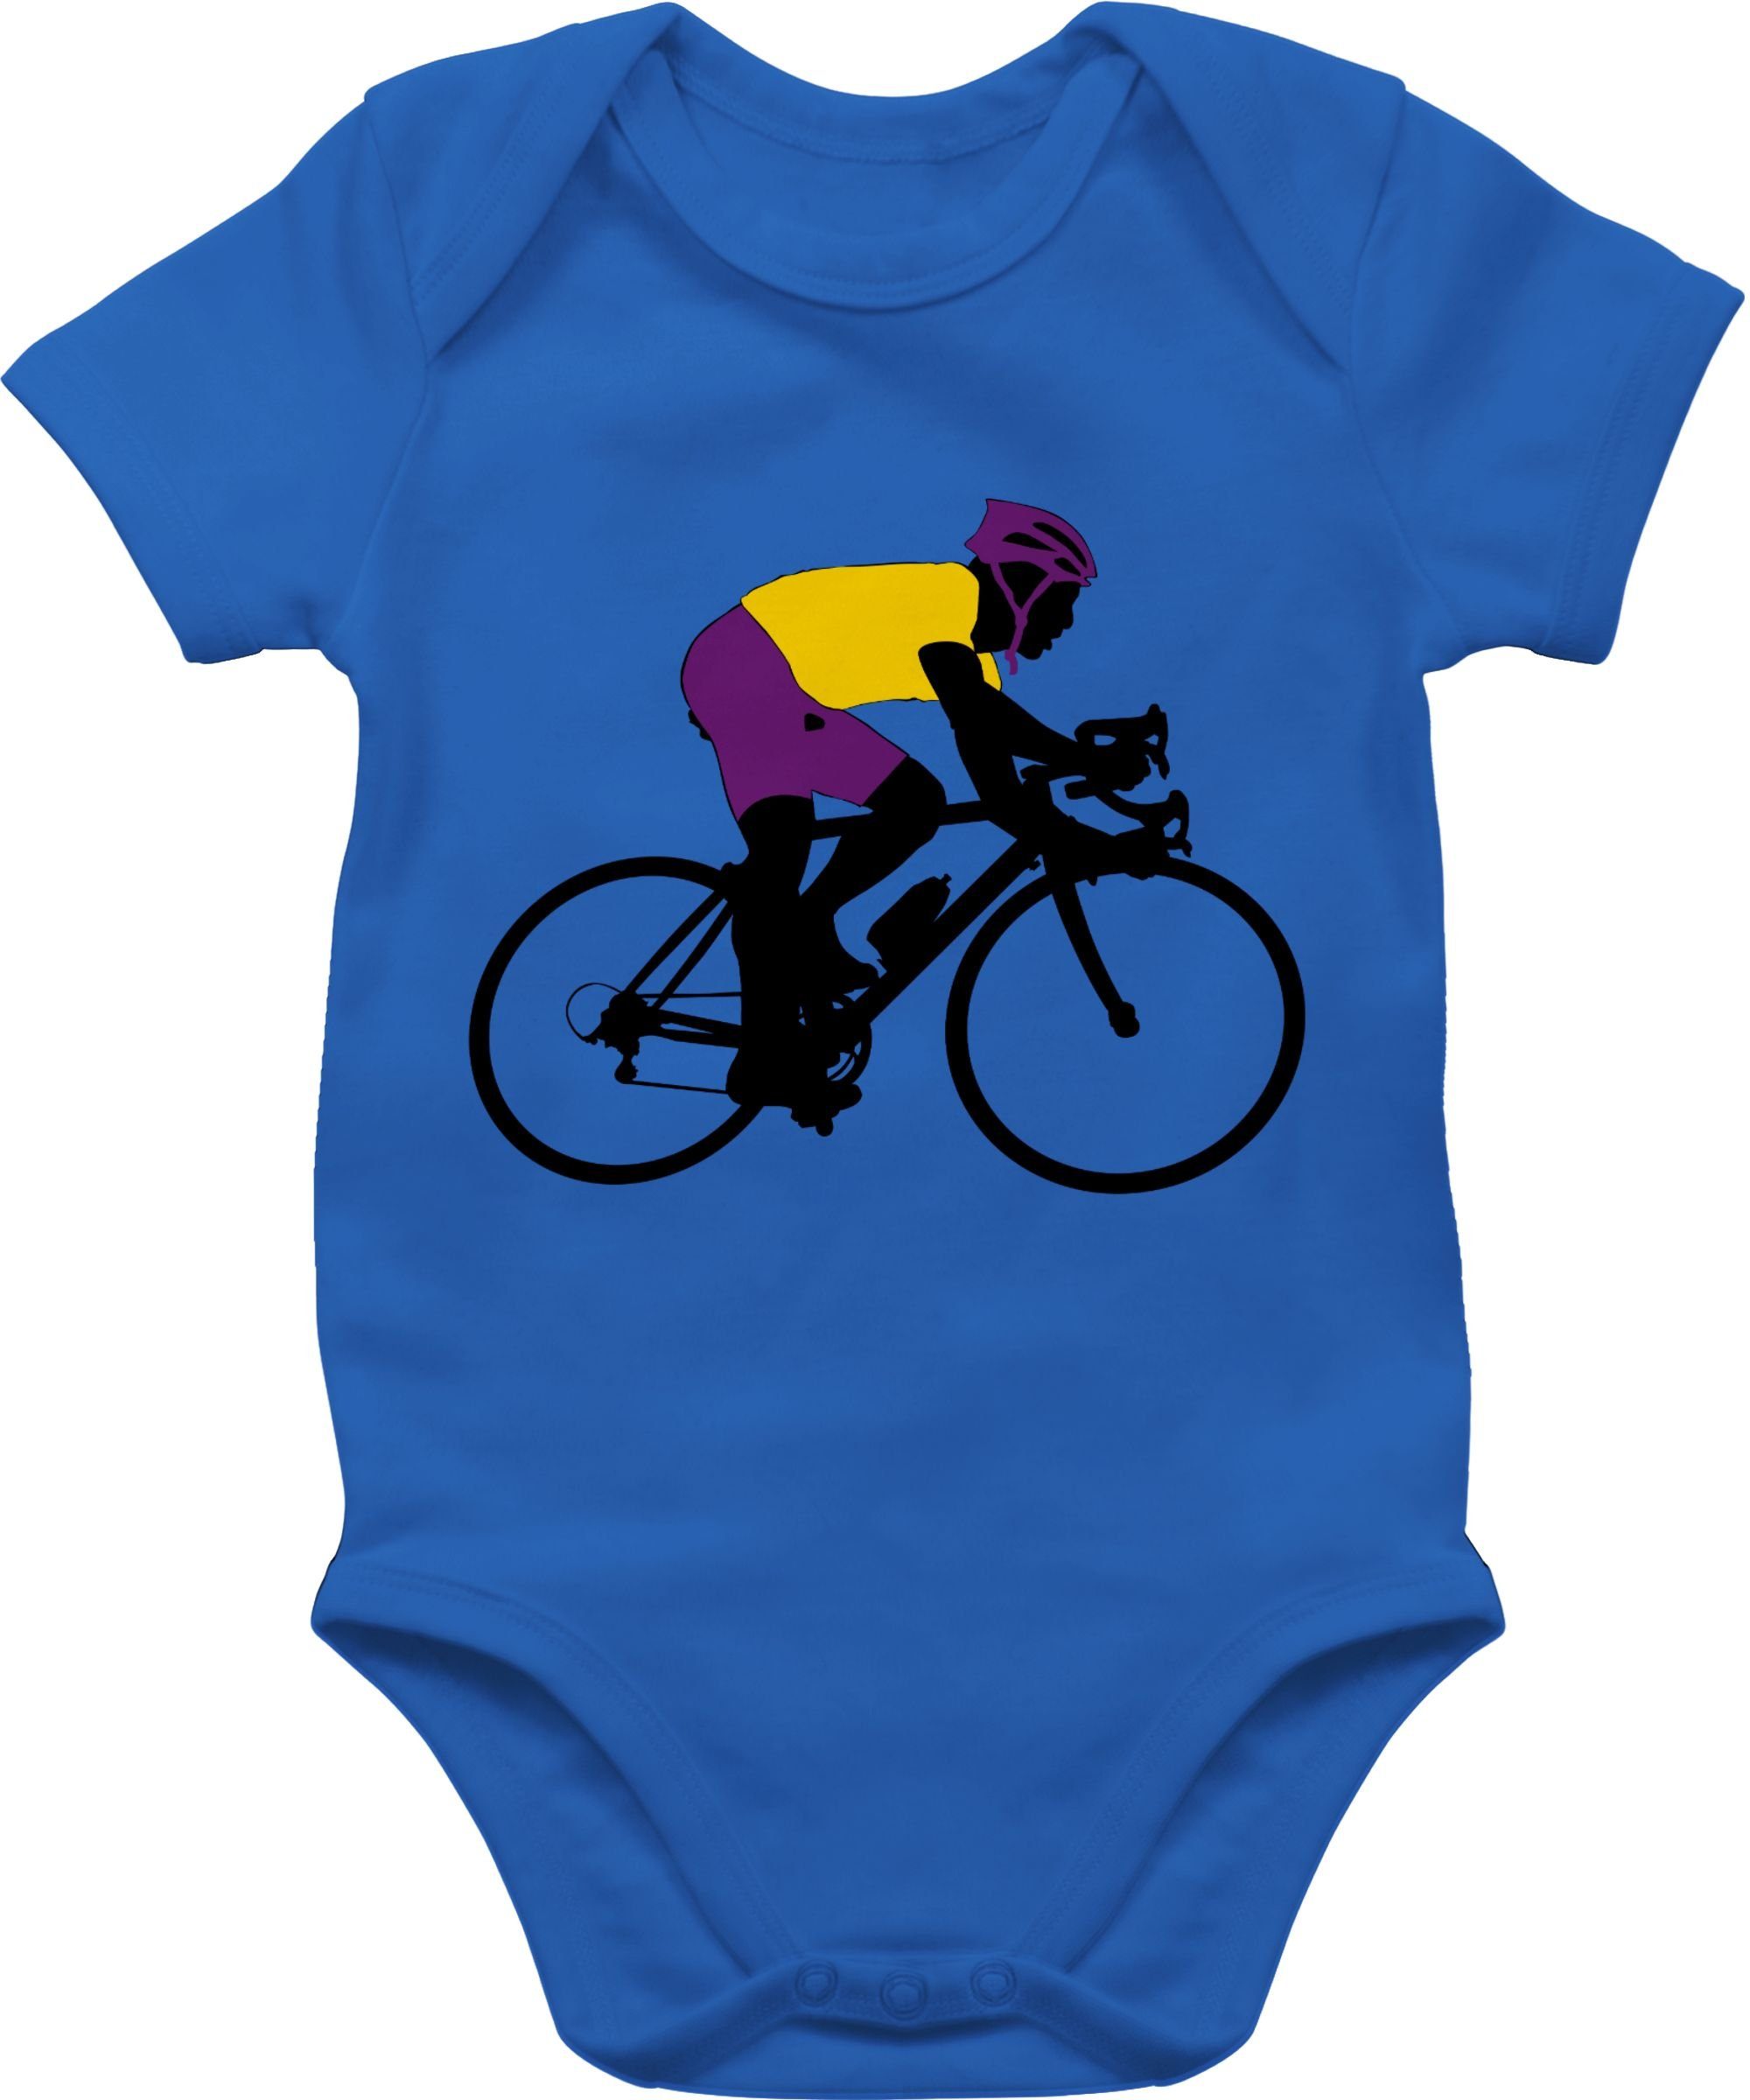 Shirtracer Shirtbody Rennrad Triathlon Sport & Bewegung Baby 1 Royalblau